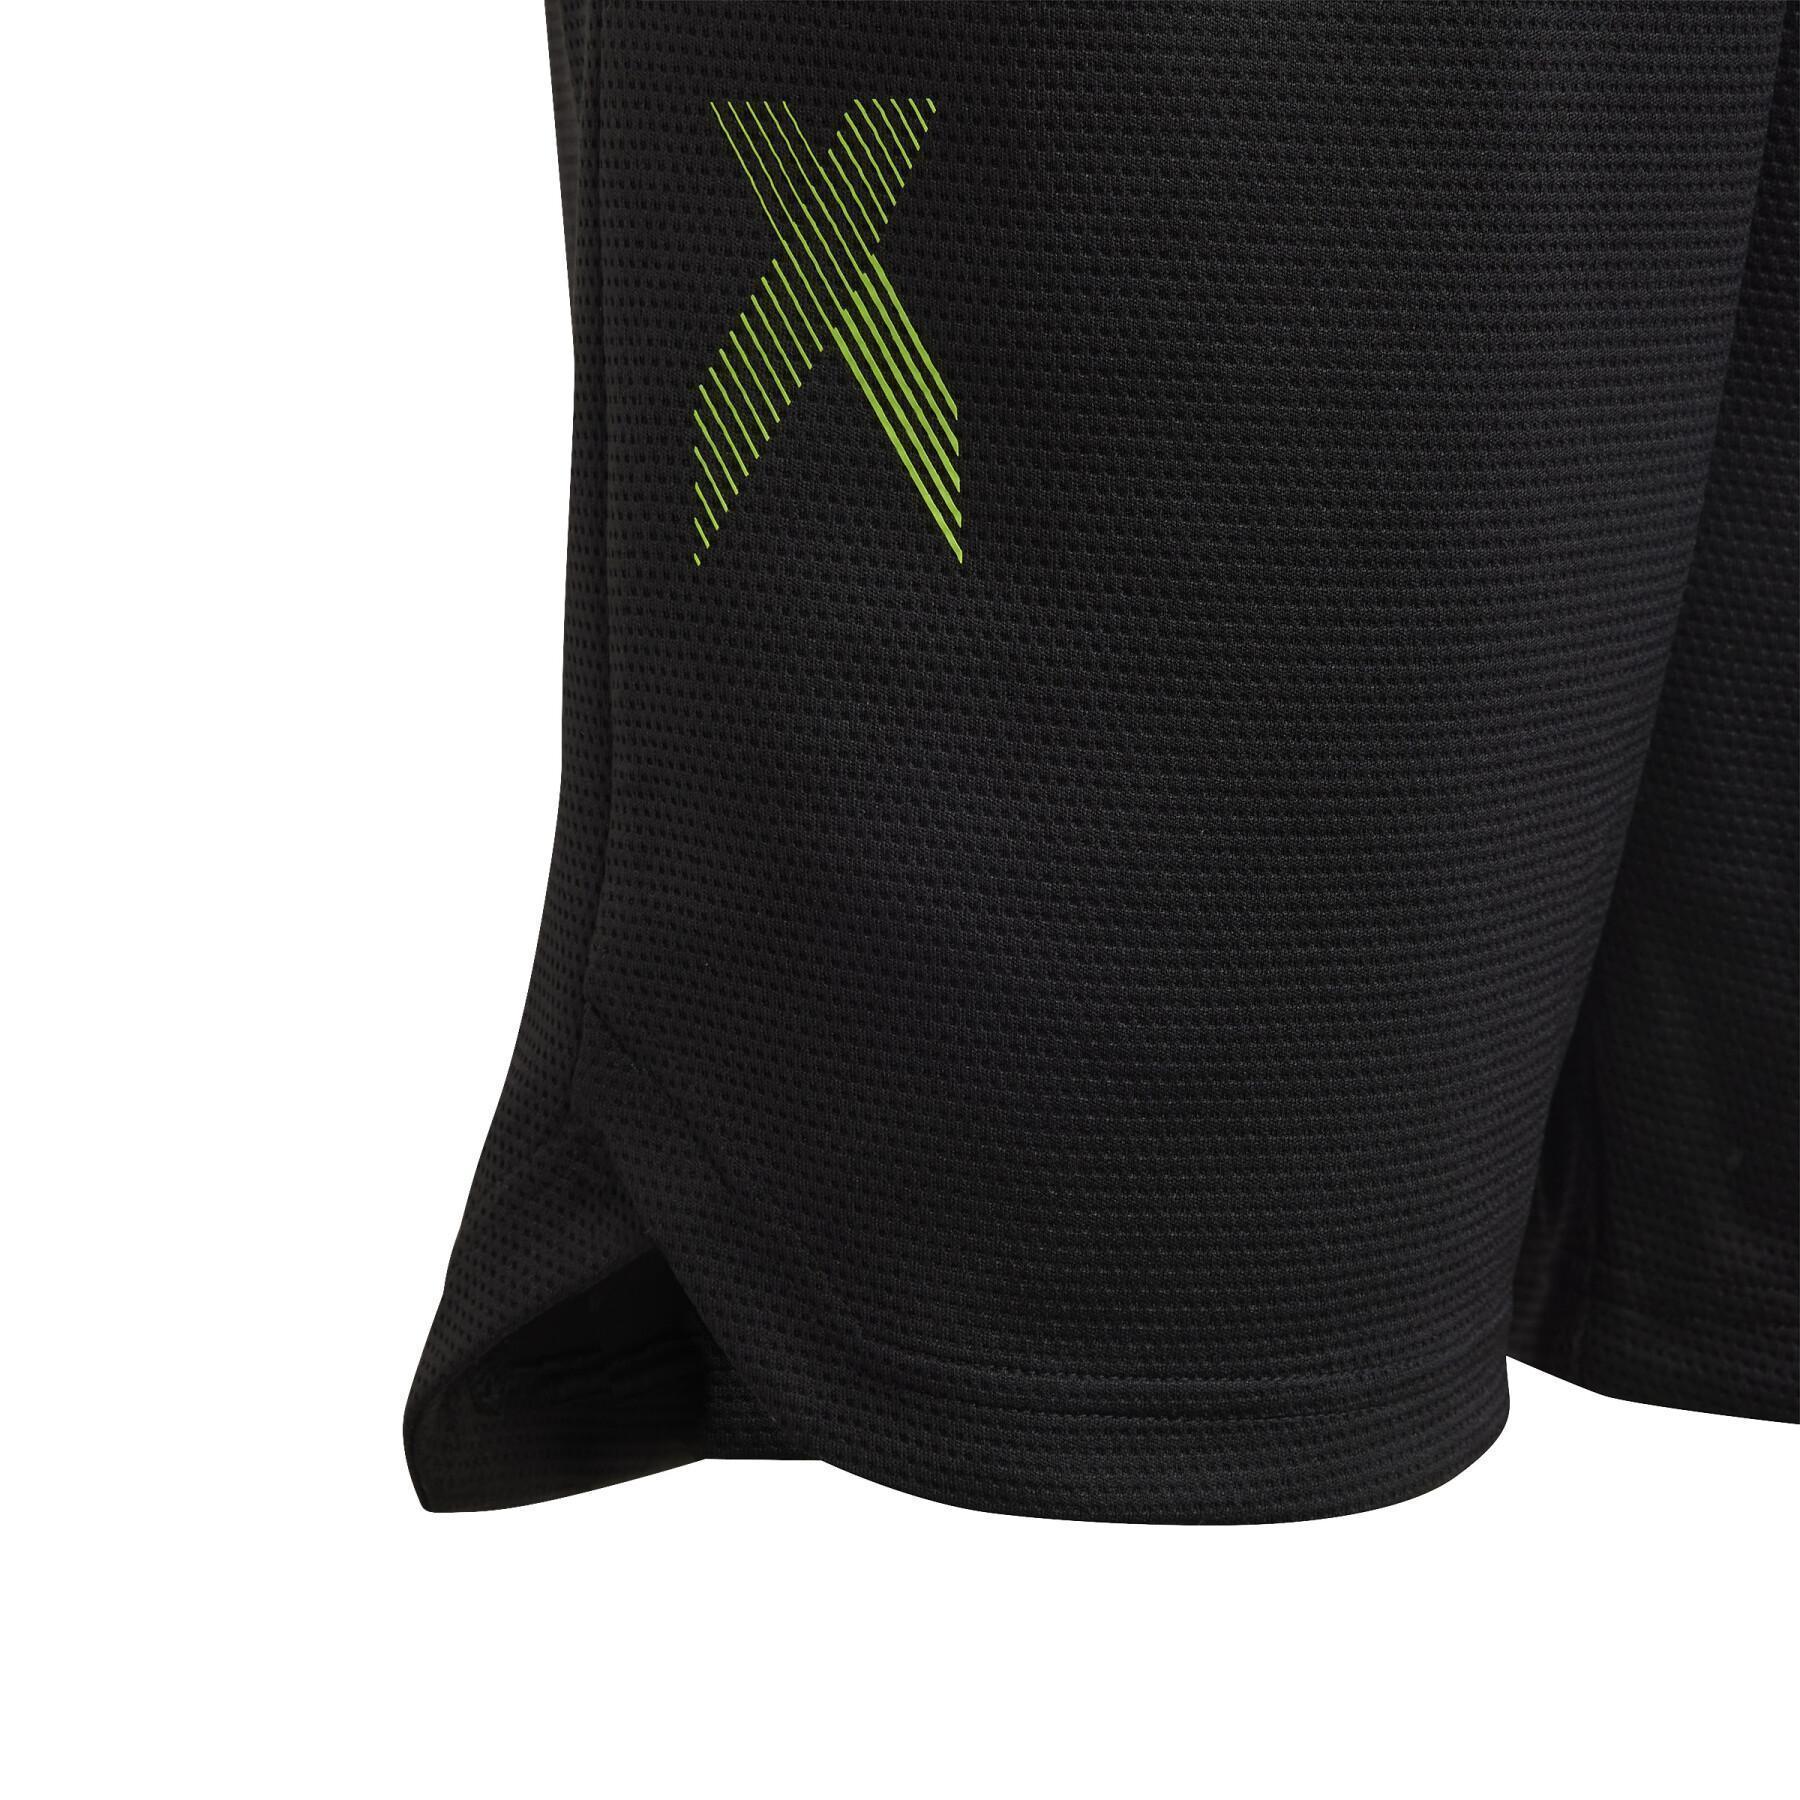 Children's shorts adidas Football-Inspired X